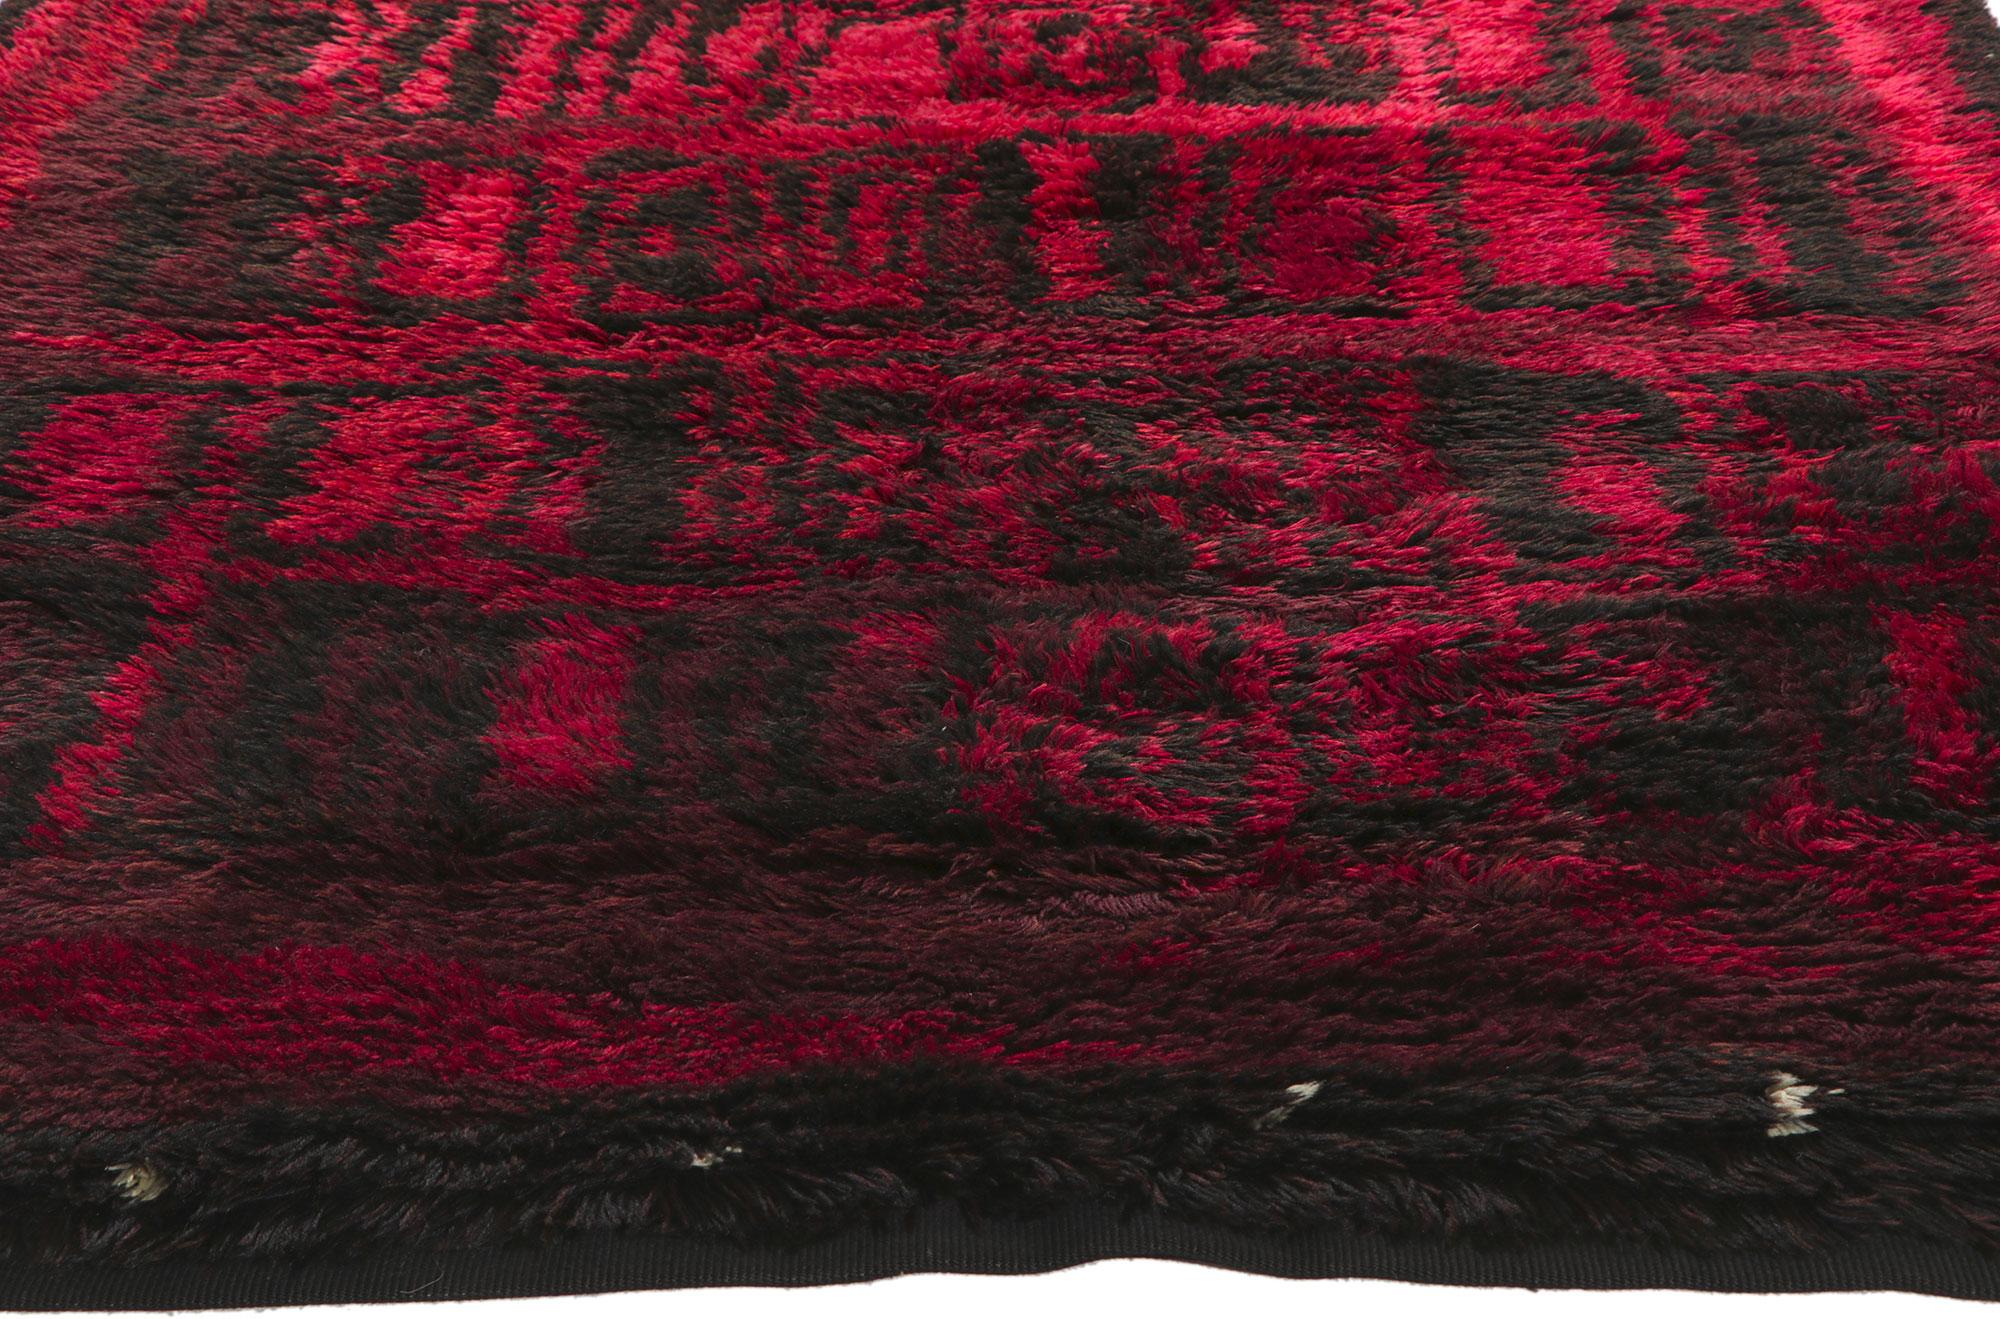 Scandinavian Modern Signed 1963 Kirsti Ilvessalo Finnish Ryijy Carpet, Punainen Syksy Red Autumn For Sale